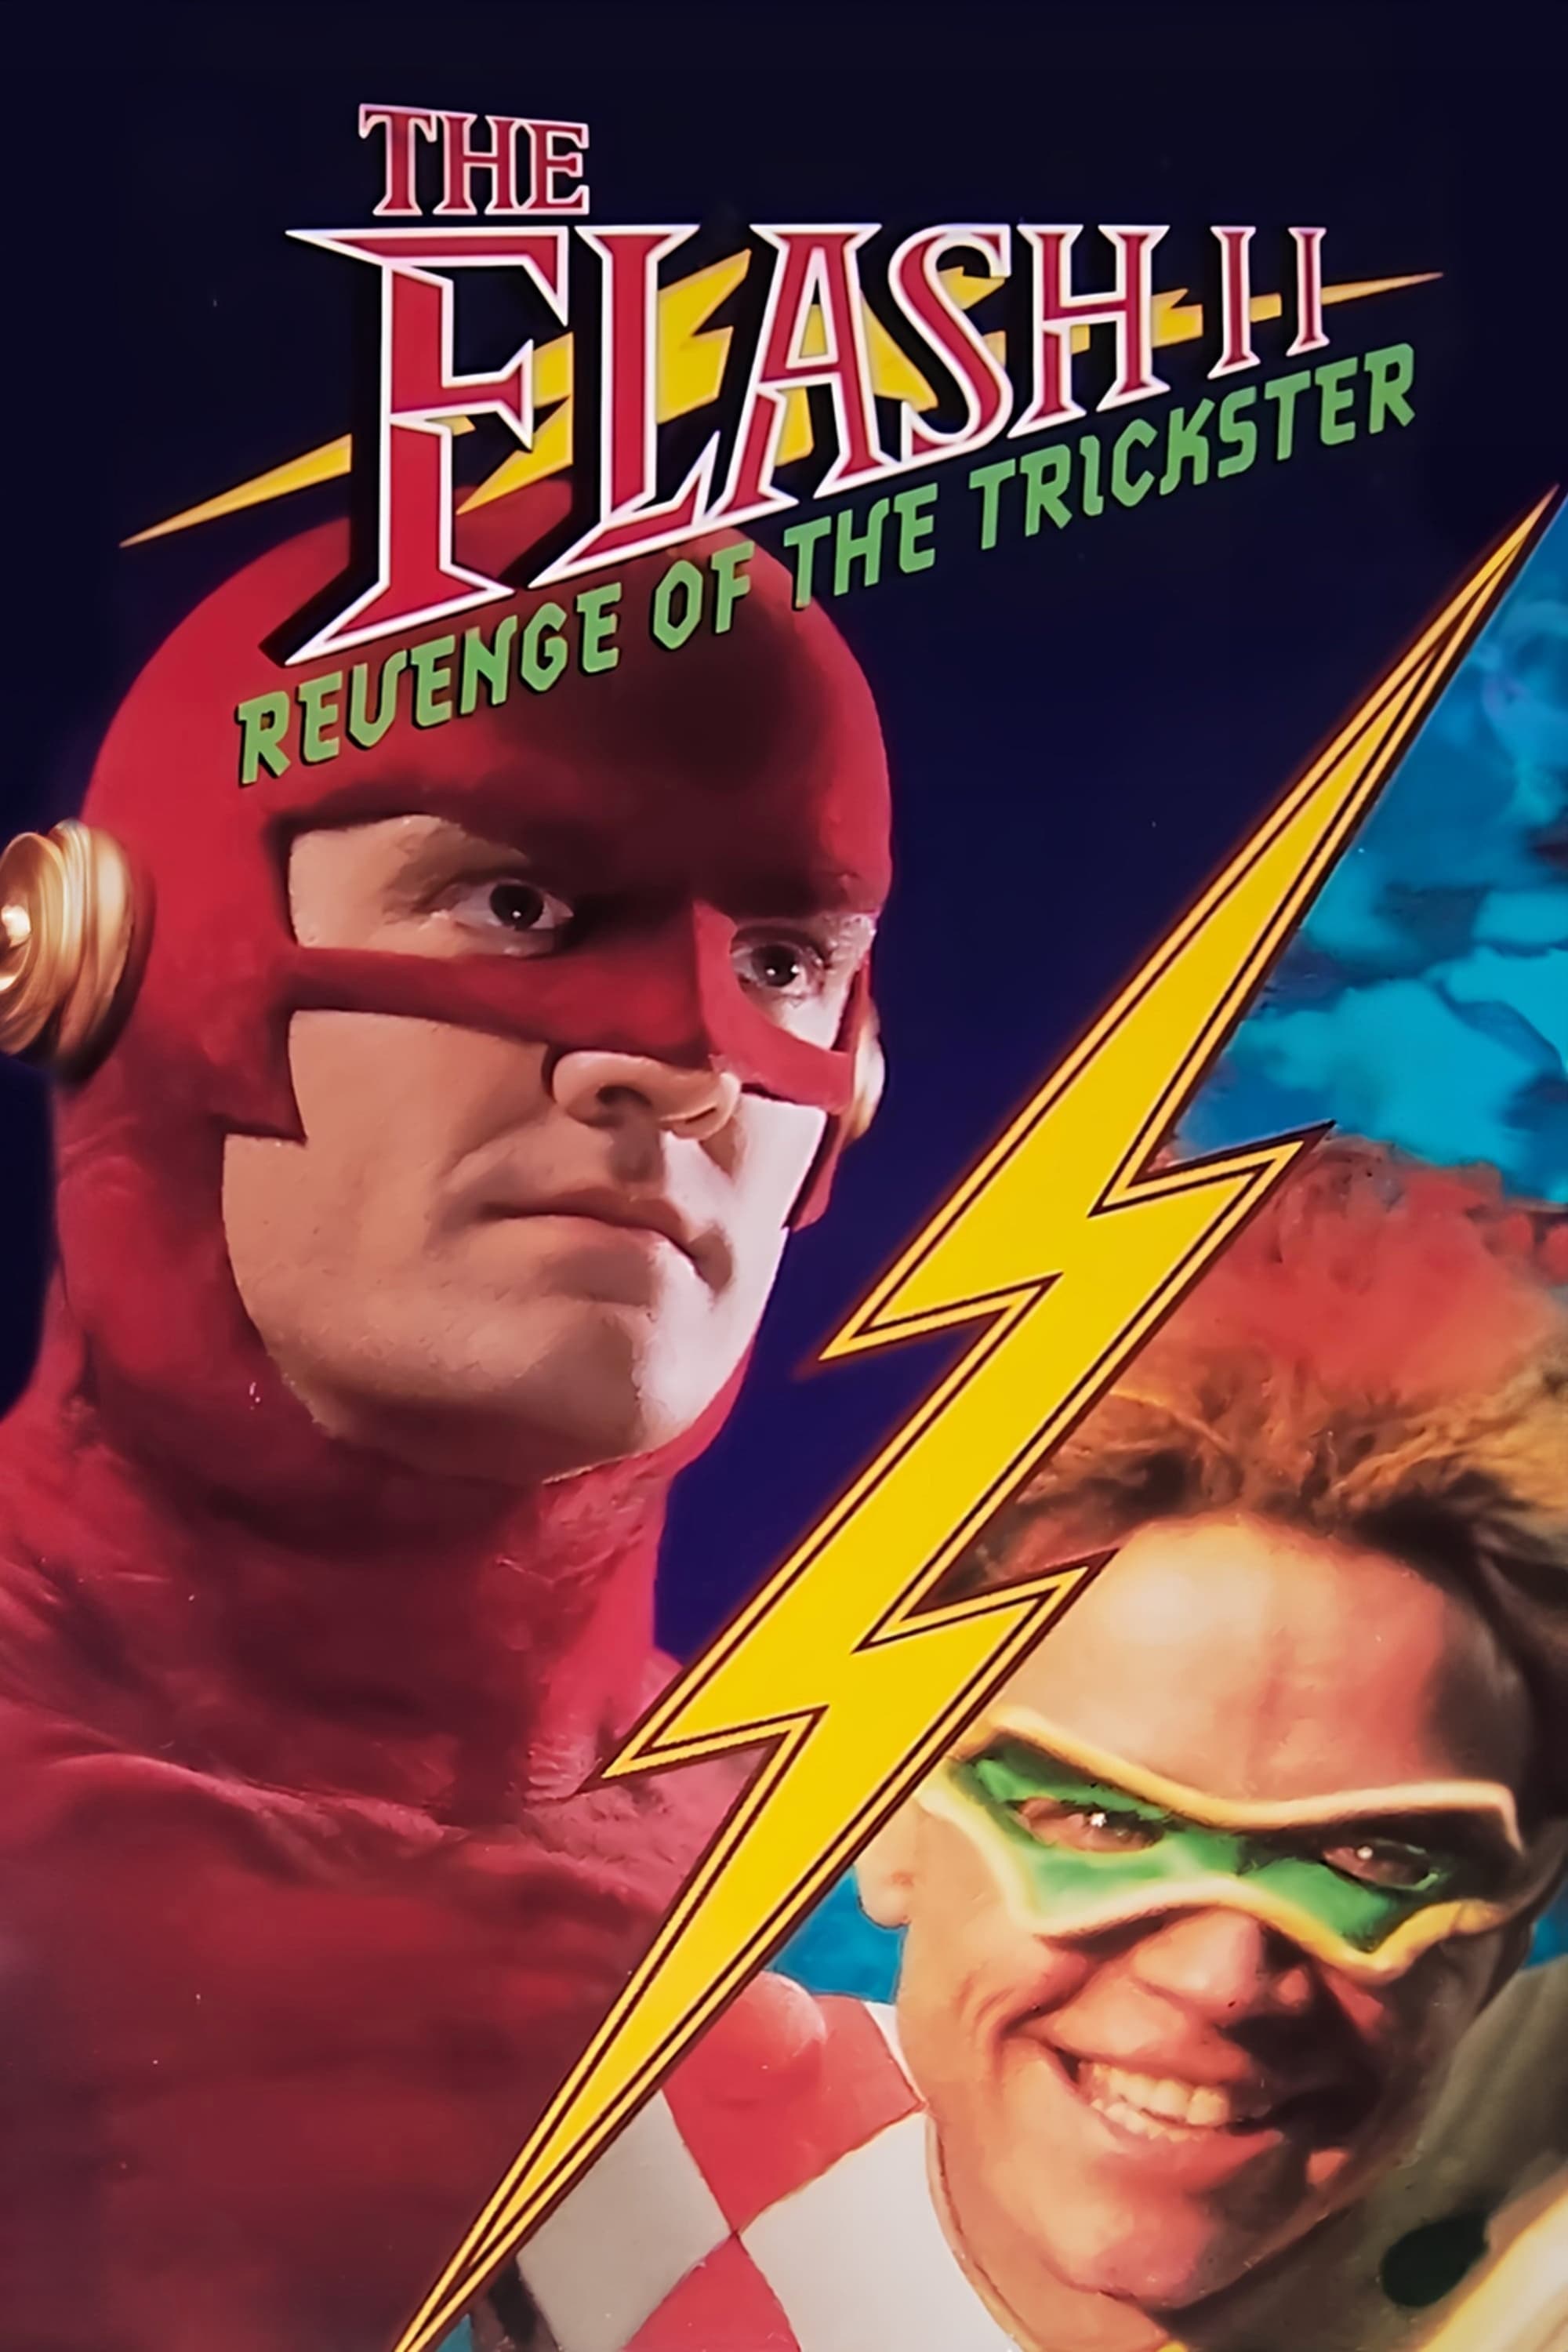 The Flash II: Revenge of the Trickster film